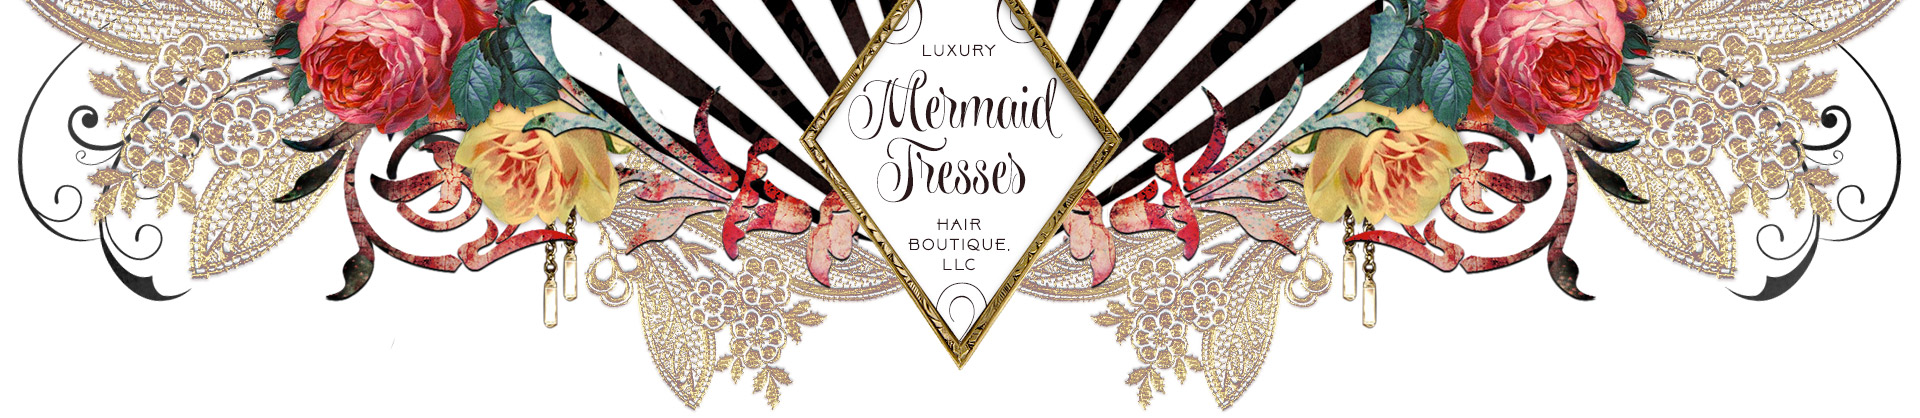 Mermaid-Tresses-Luxury-Hair-HEADER website header by Val Frimon and WeirdTales Designs Studio